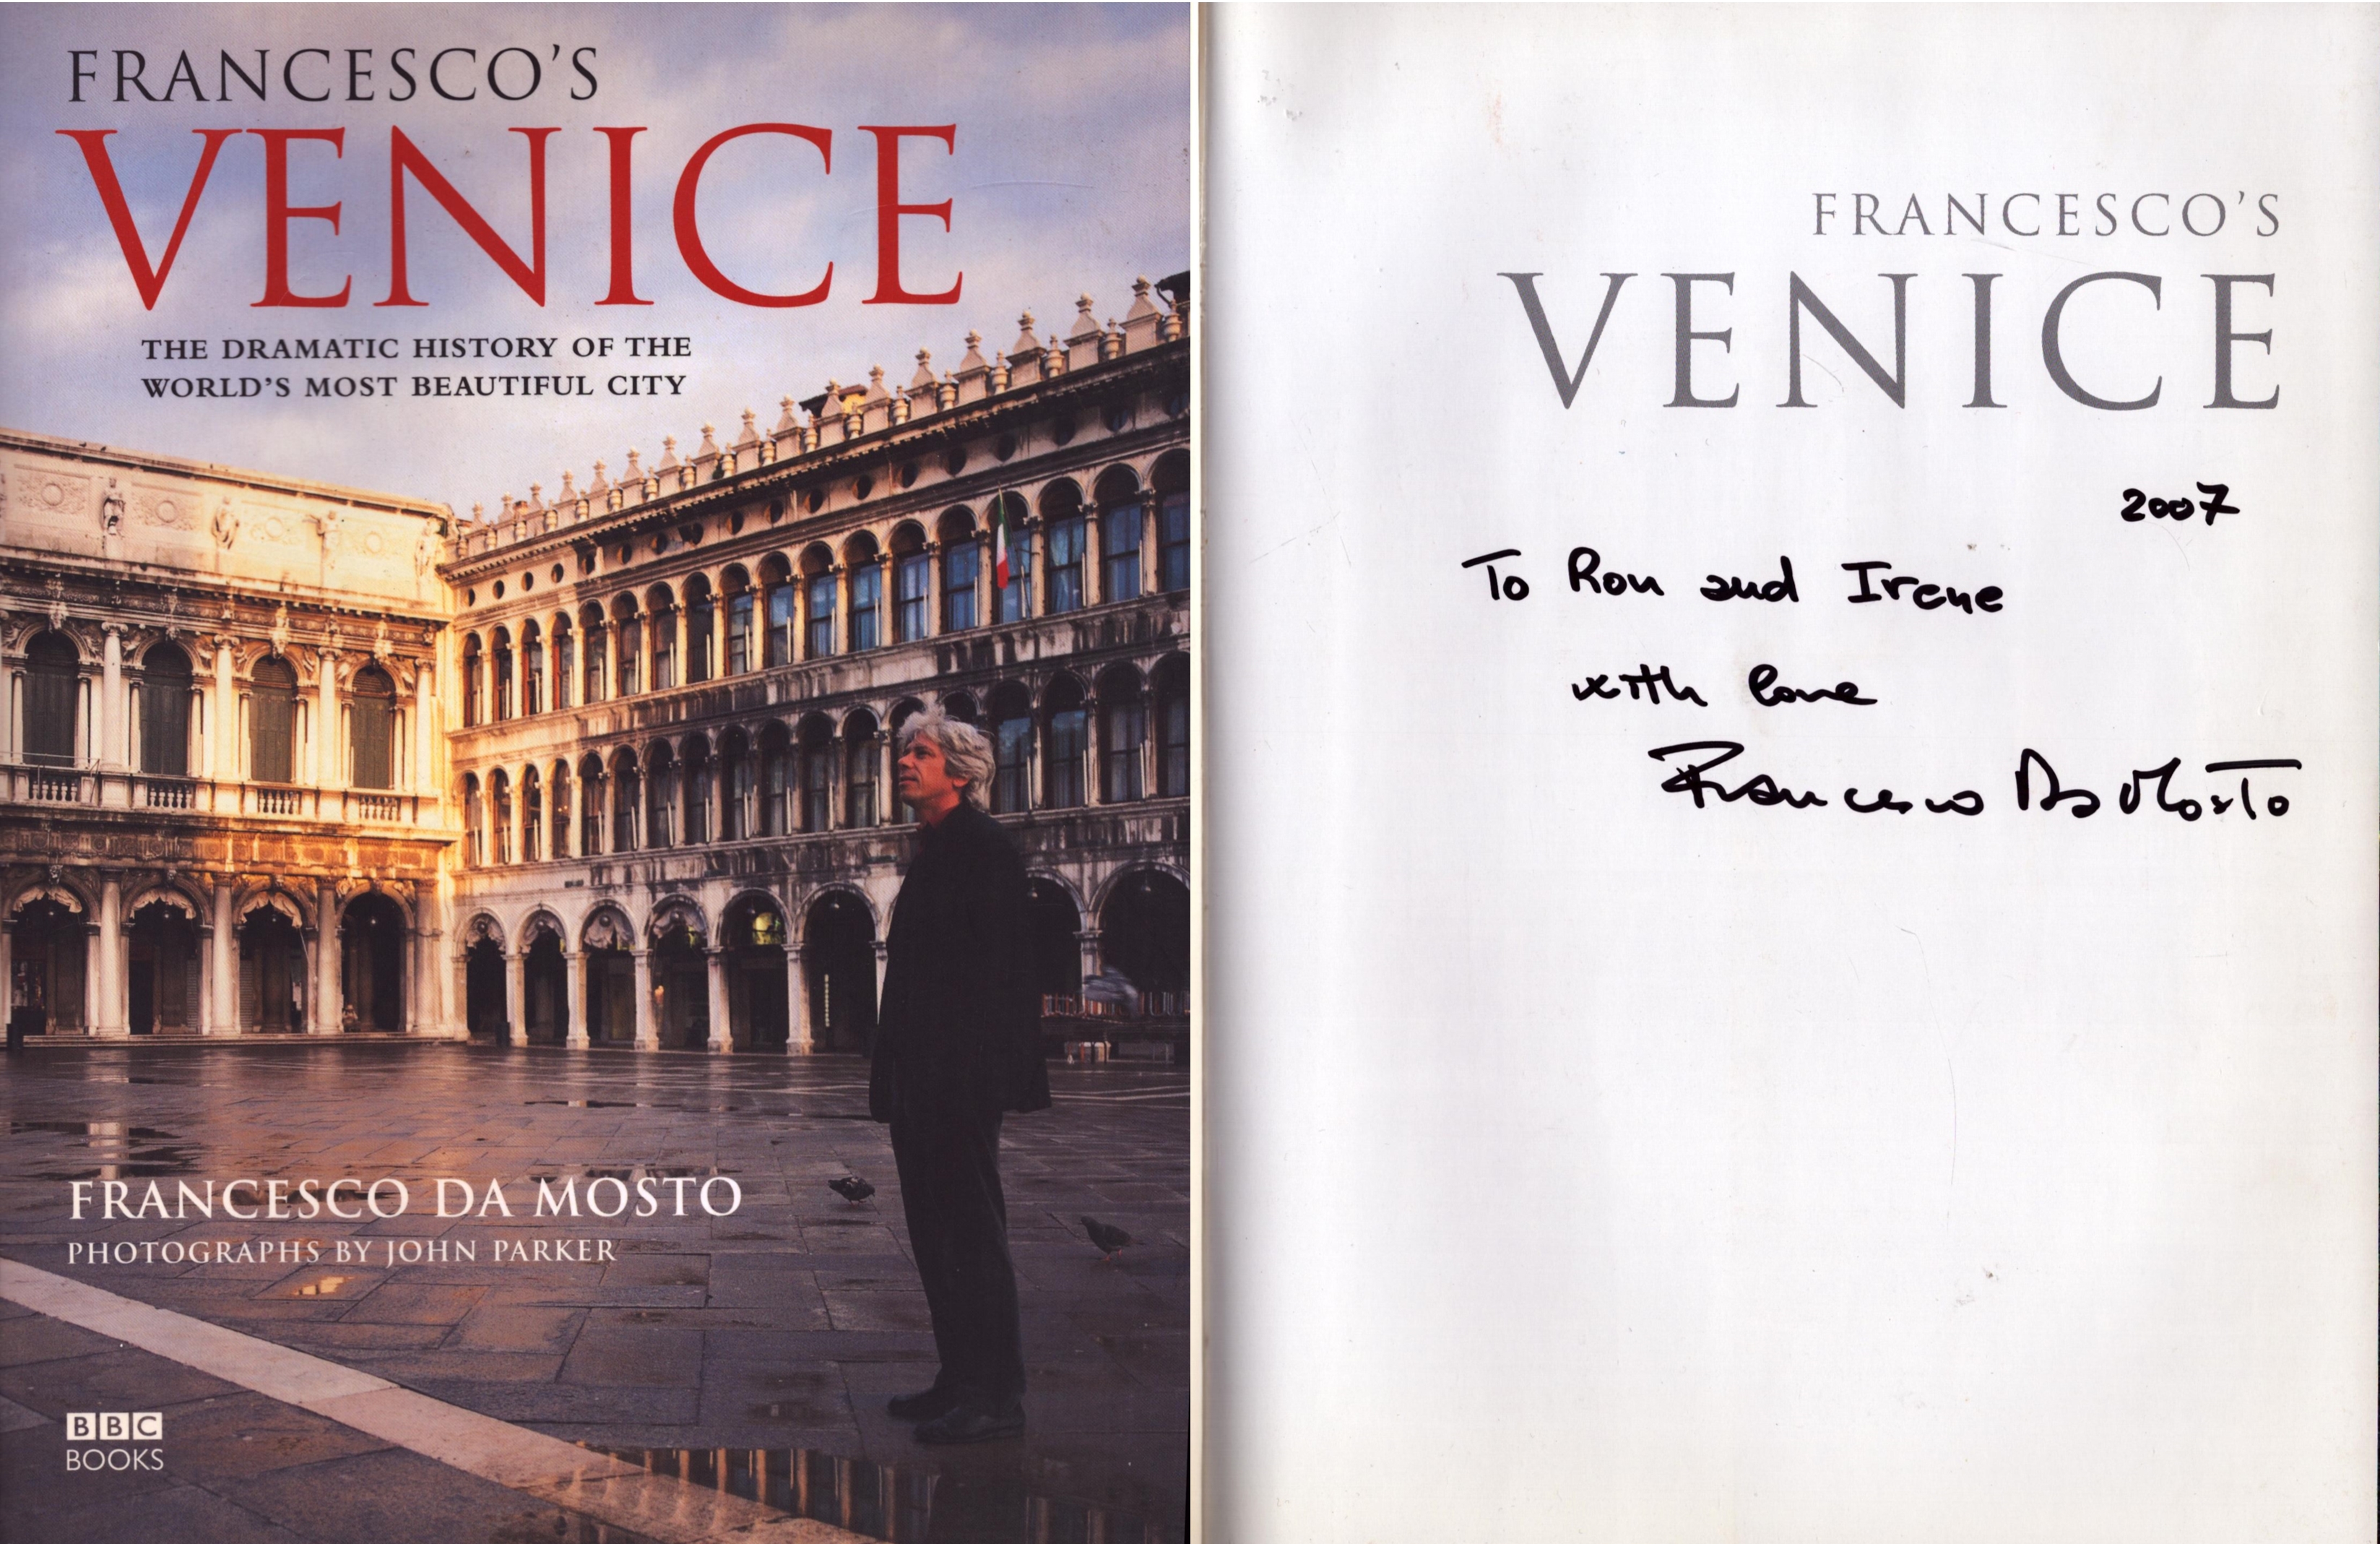 Francesco's Venice: The Dramatic History of the World's Most Beautiful City by Francesco Da Mosto